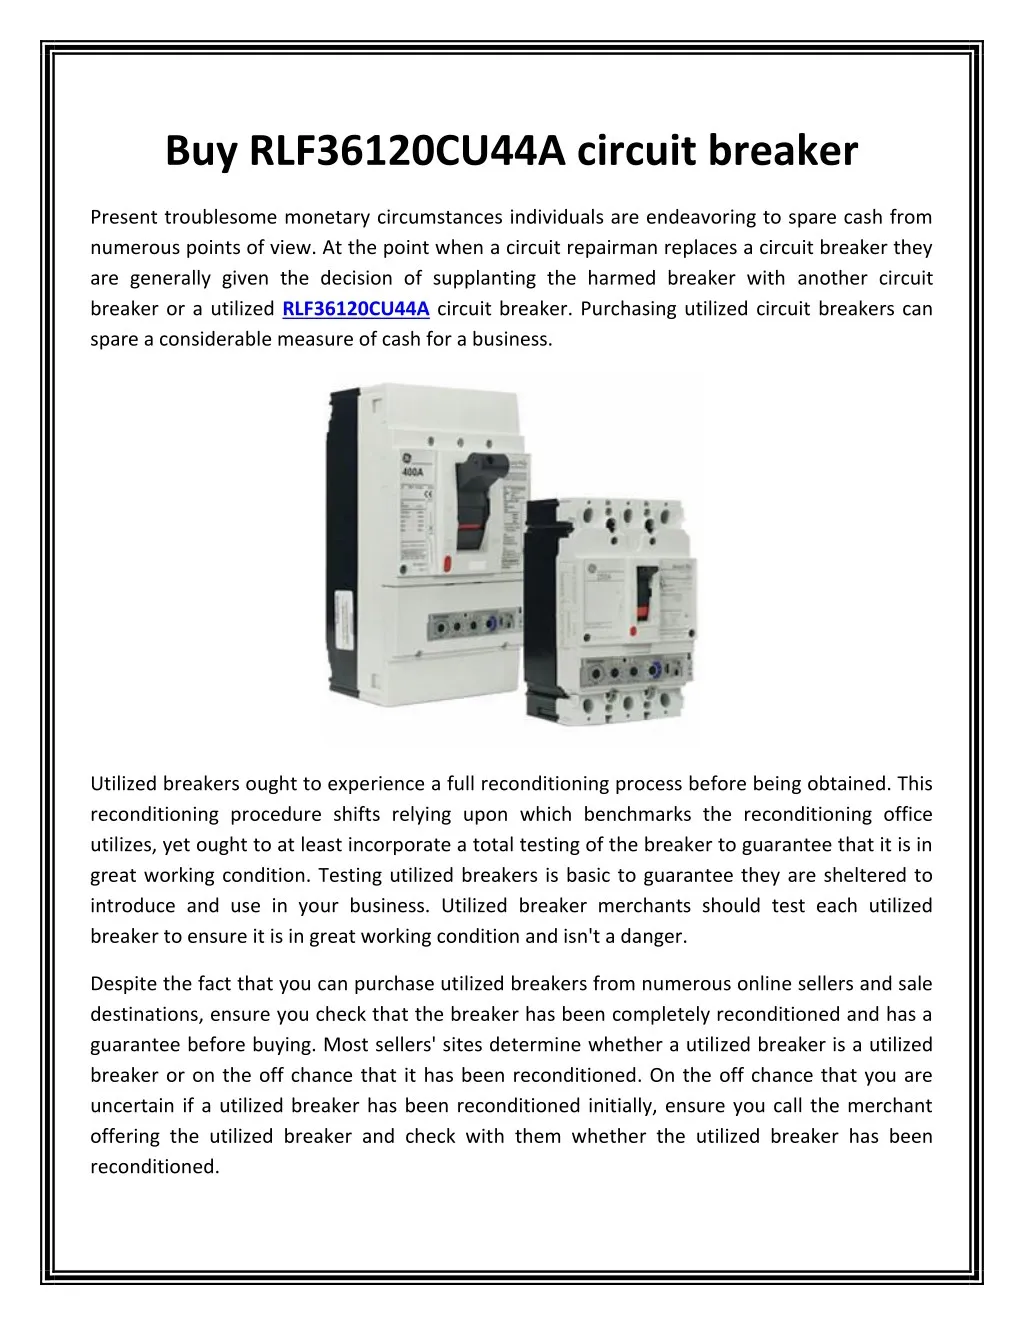 buy rlf36120cu44a circuit breaker